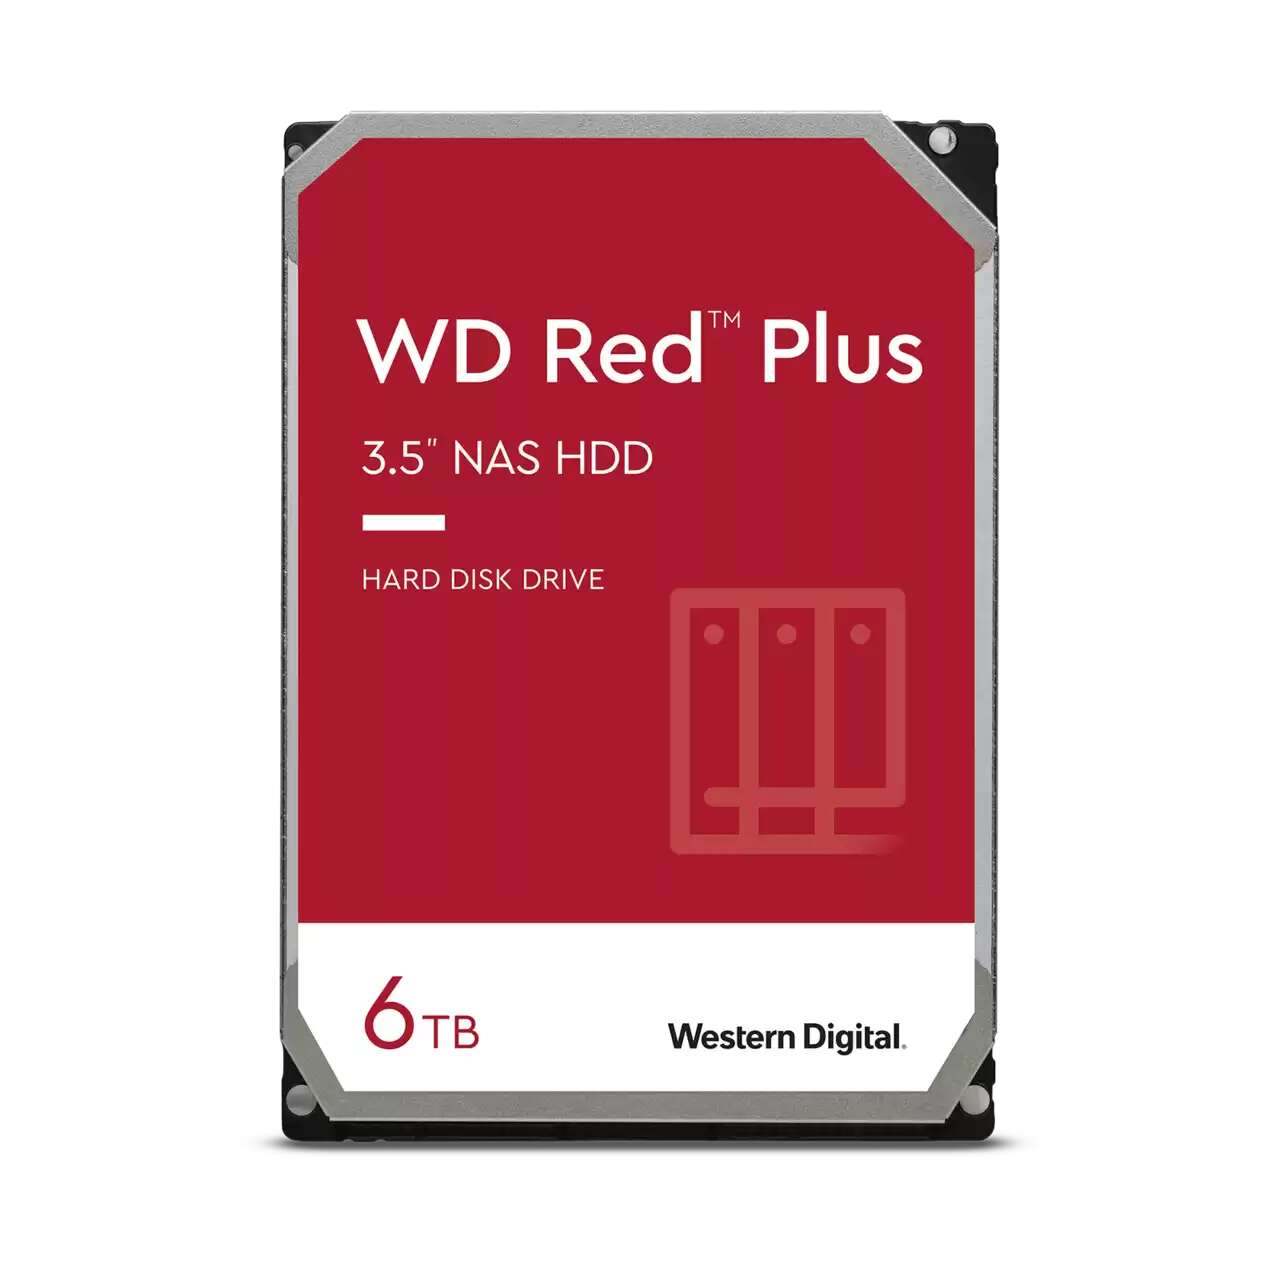 Western digital 6tb (256mb) red plus sata3 3.5" nas hdd